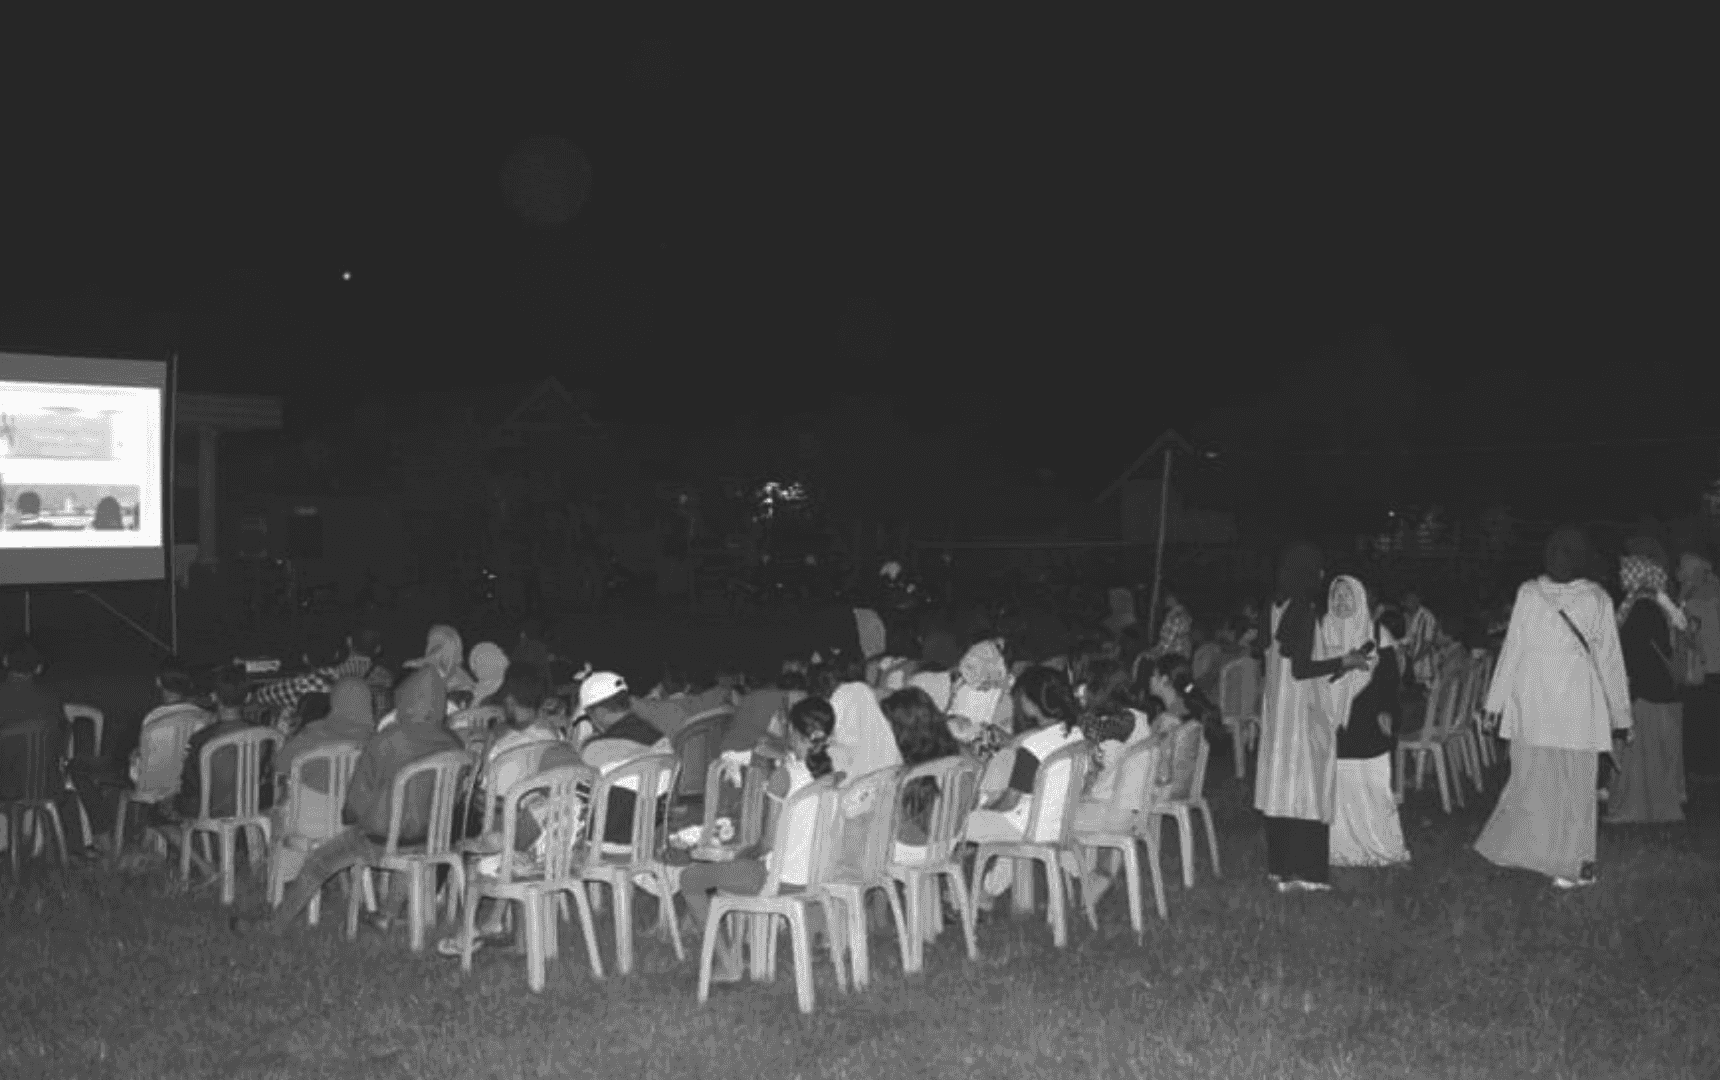 Nonton bareng dalam rangka memperingati Hari Film Nasional 2019 berlokasi di Dusun Batu Alang.